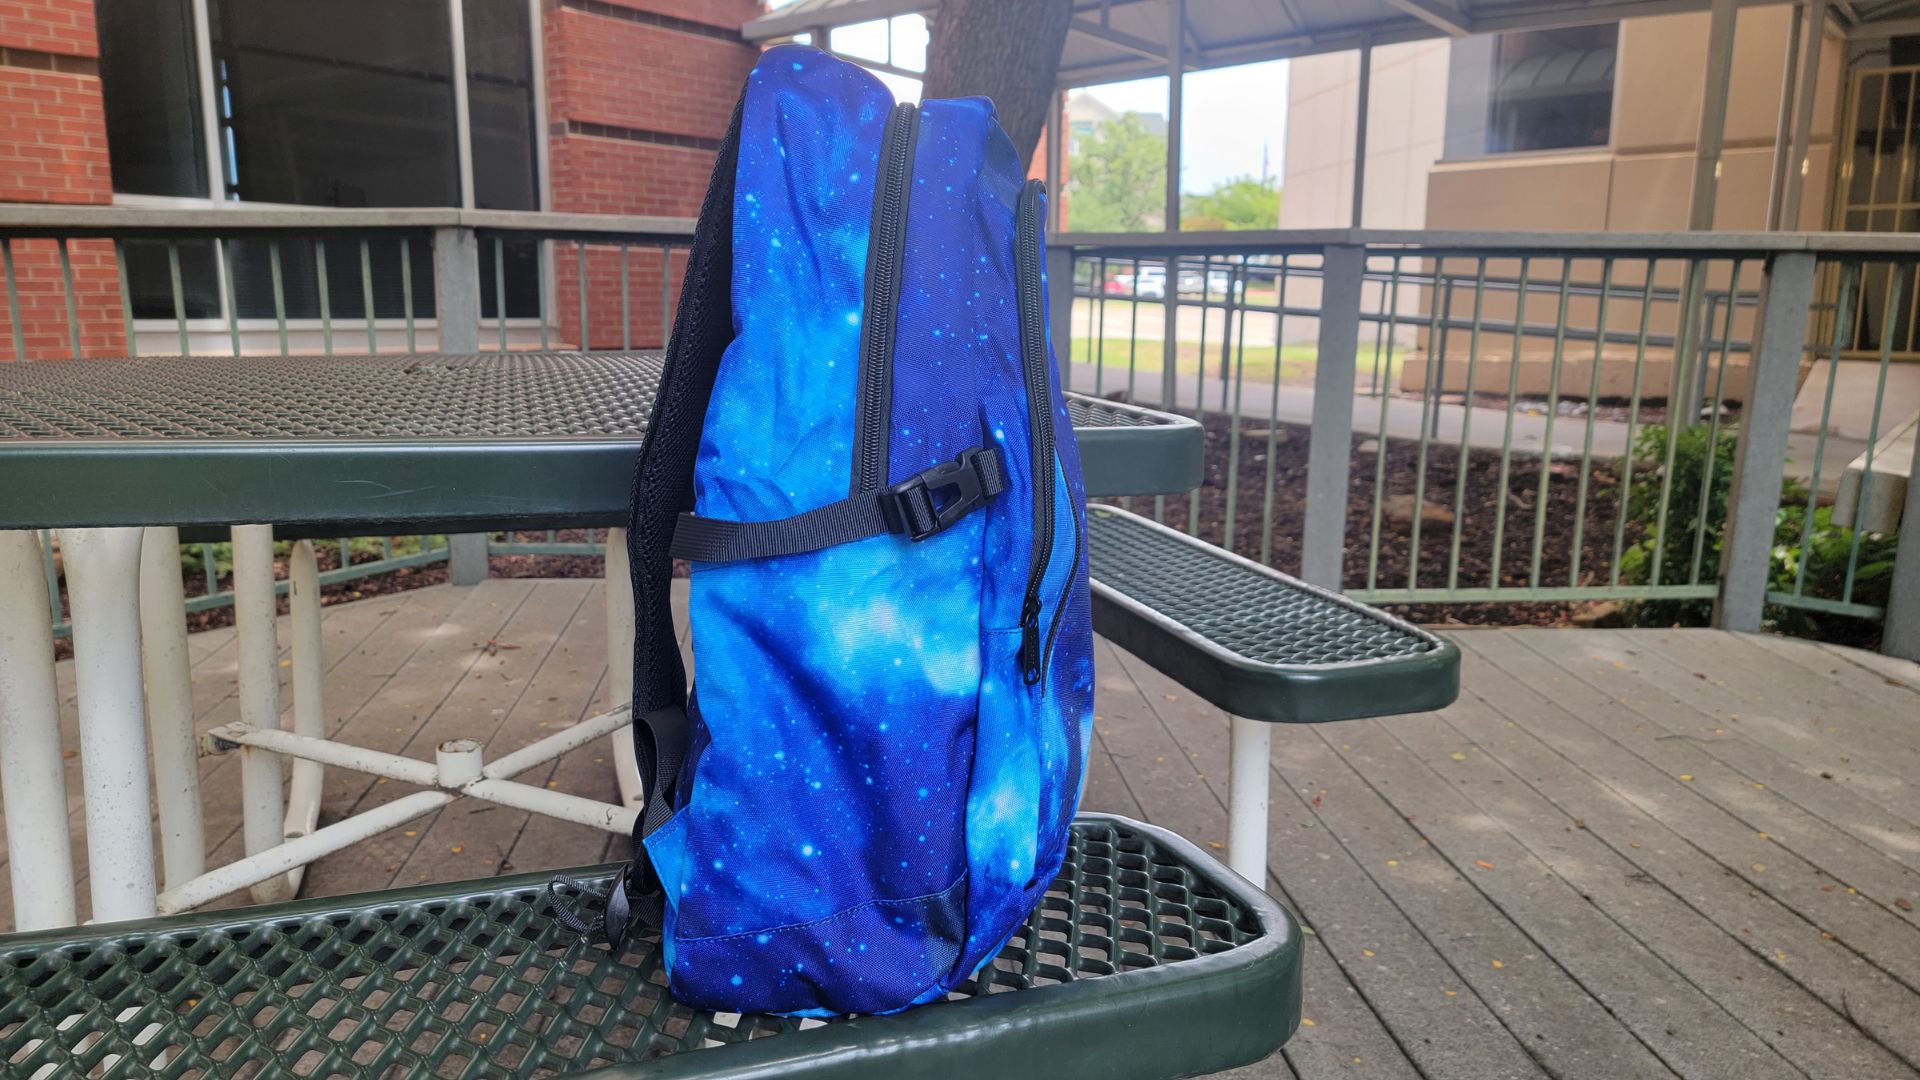 Mancro travel backpack